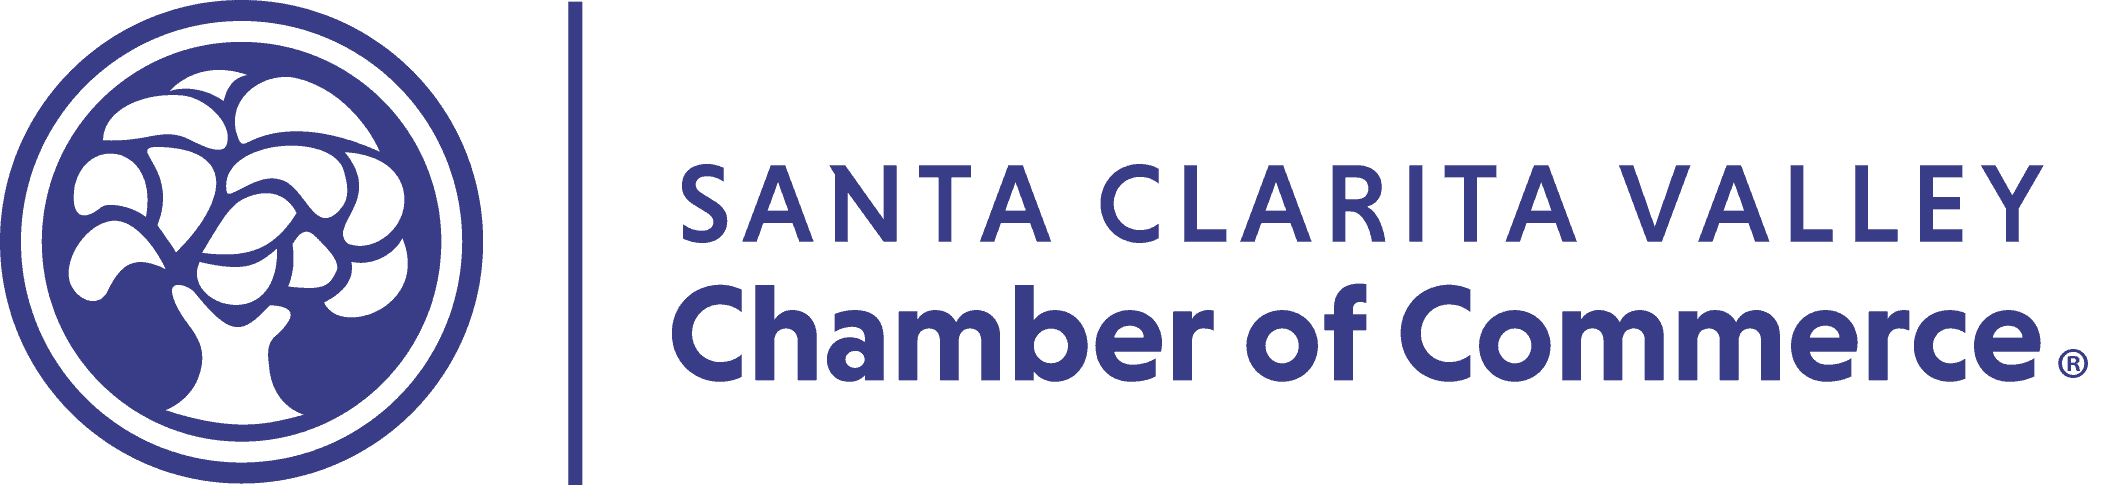 santa clarita valley chamber of commerce